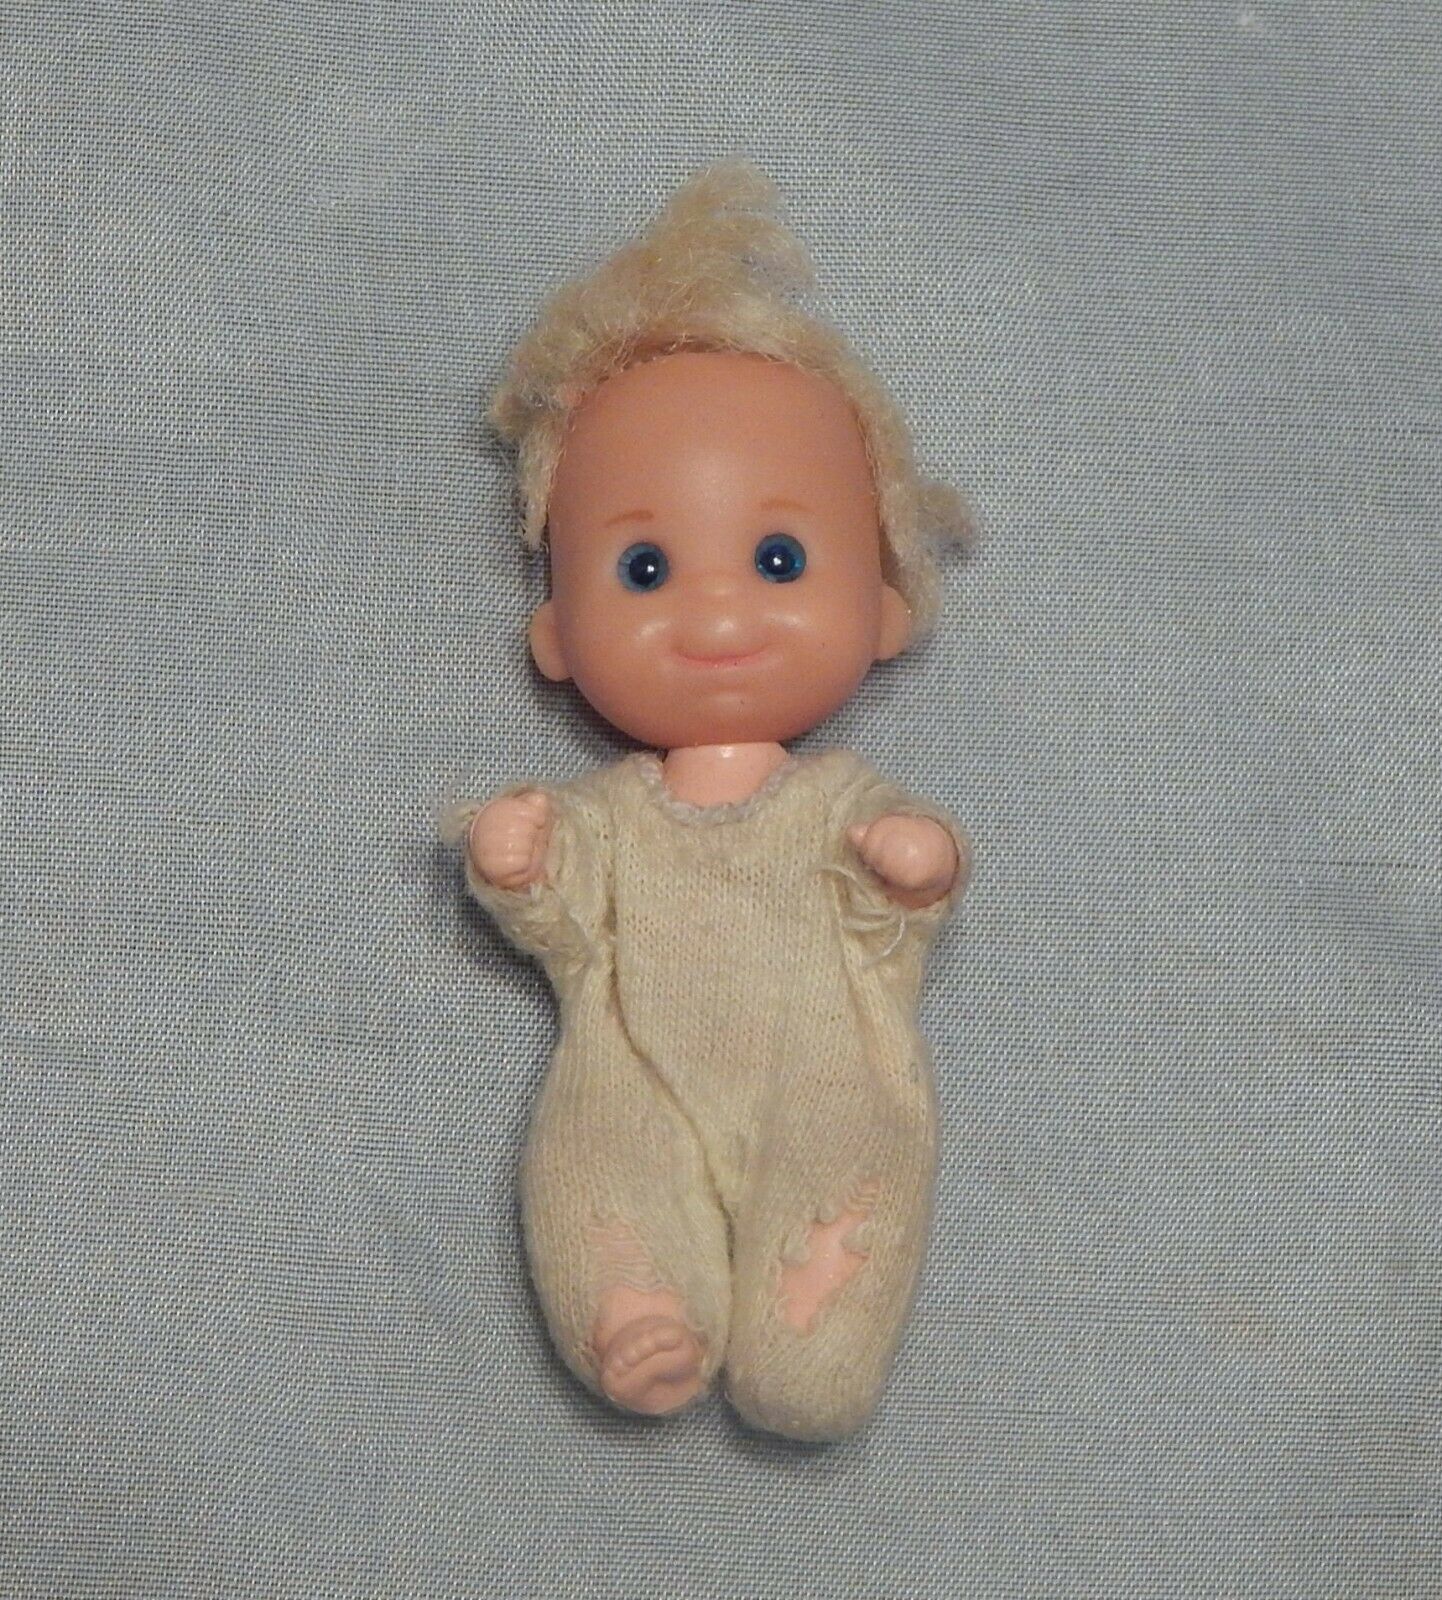 1973 mattel doll